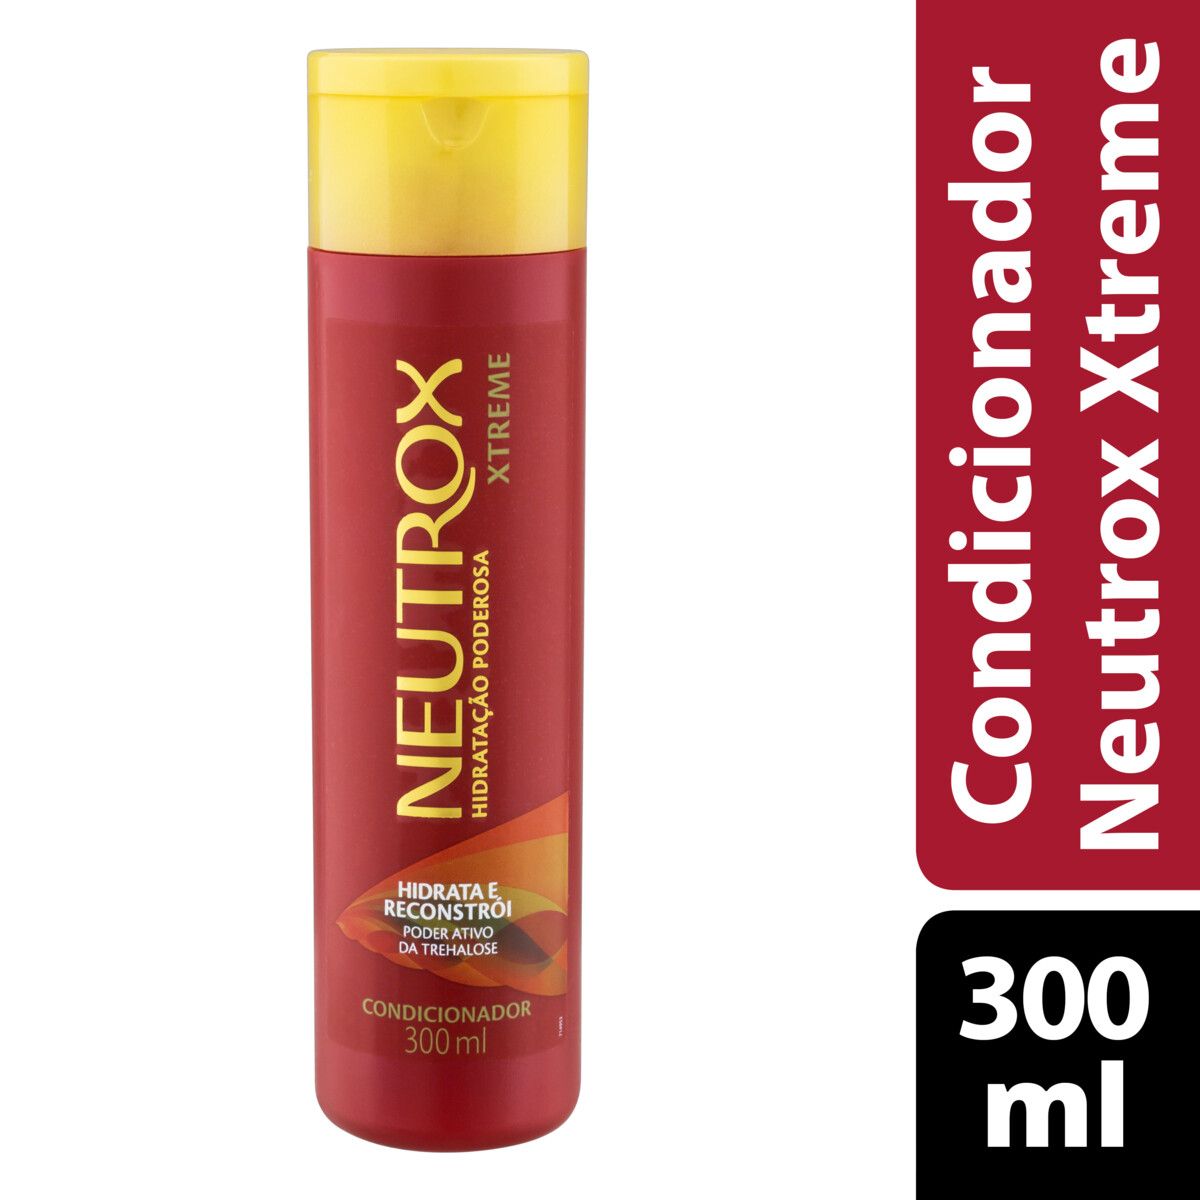 Condicionador Neutrox Xtreme Frasco 300ml image number 1